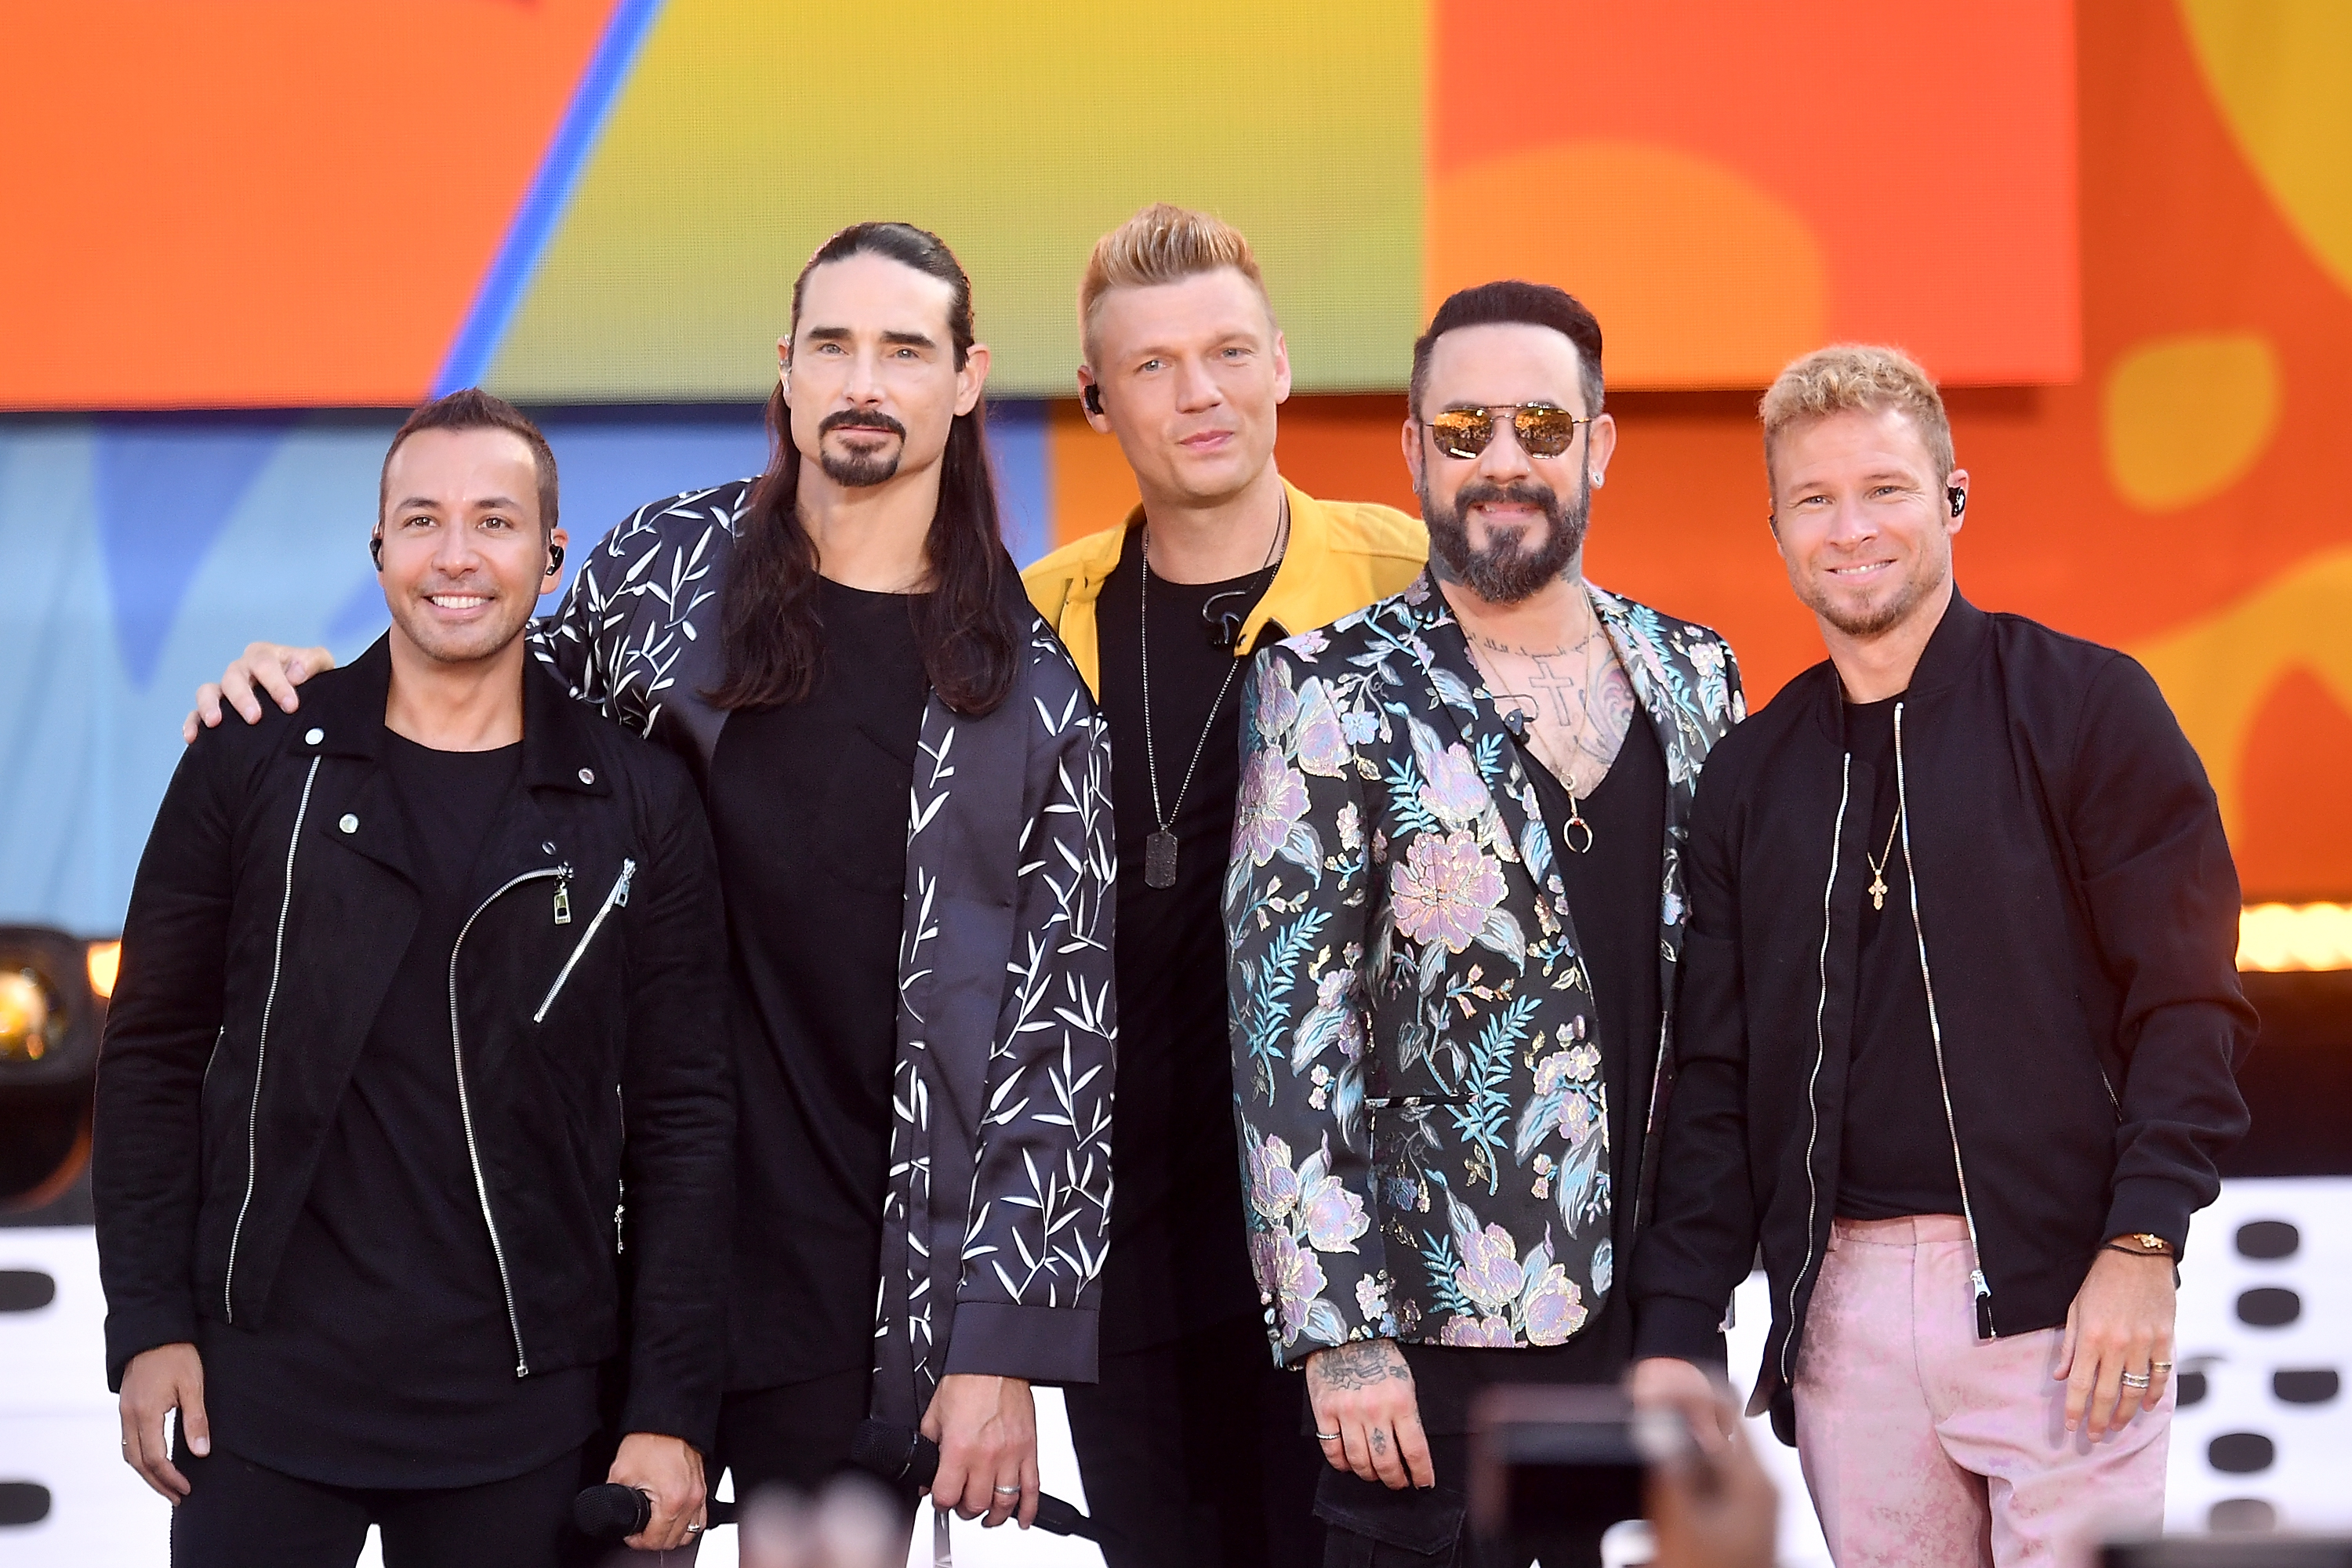 Backstreet Boys' Brian Littrell Defends Nick Carter, Suggests Rape Accuser Is "Fame Seeker"